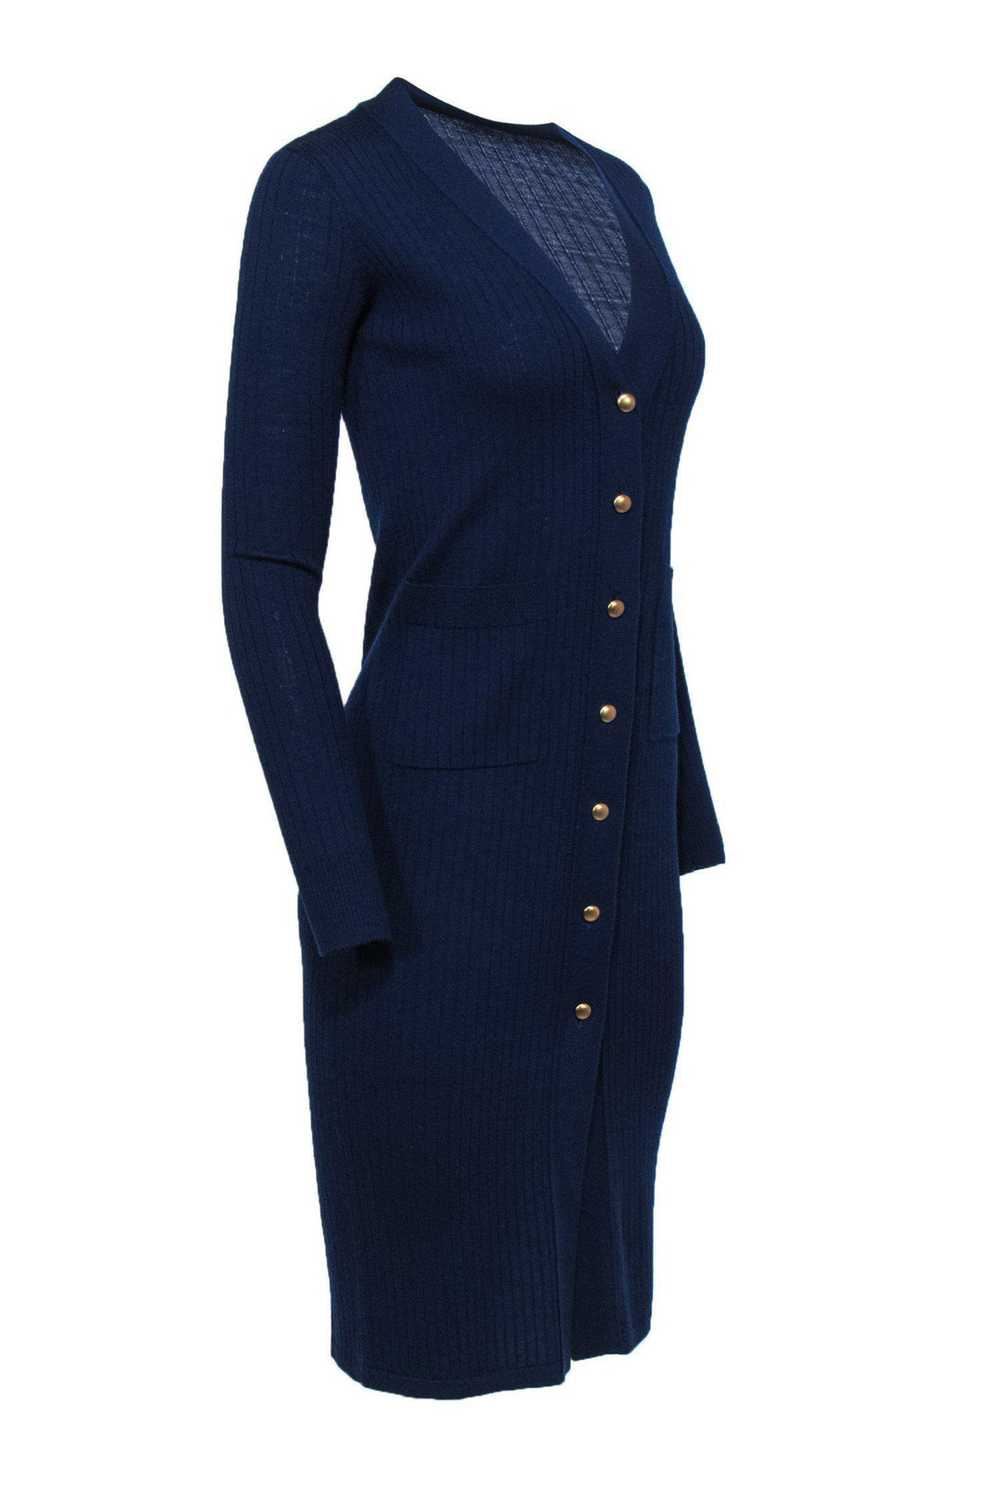 MO&Co. - Navy Blue Ribbed Knit Midi Dress w/ Butt… - image 2